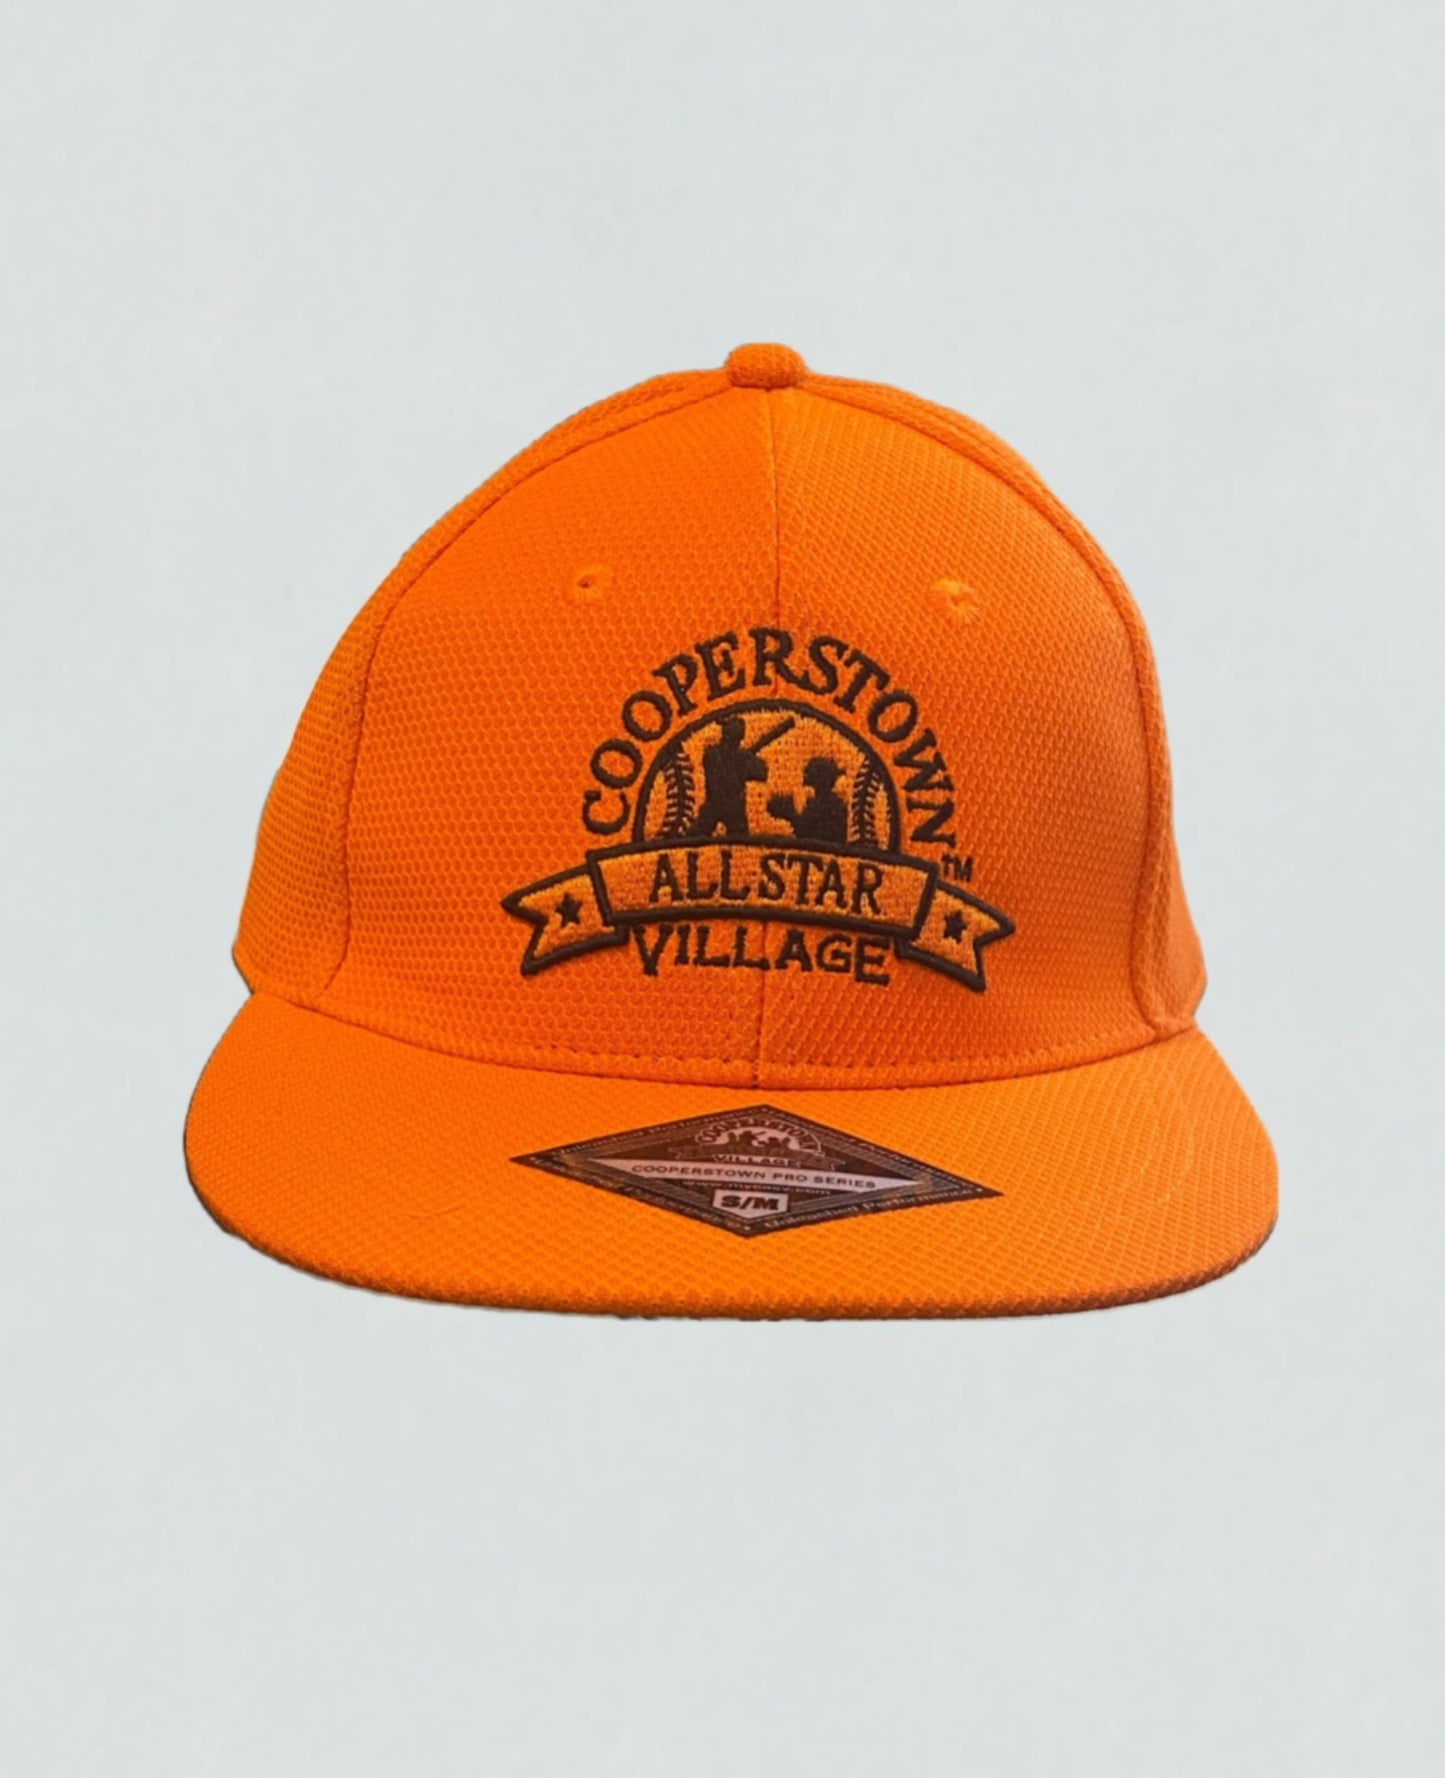 Houston Orange Custom Fit Baseball Cap